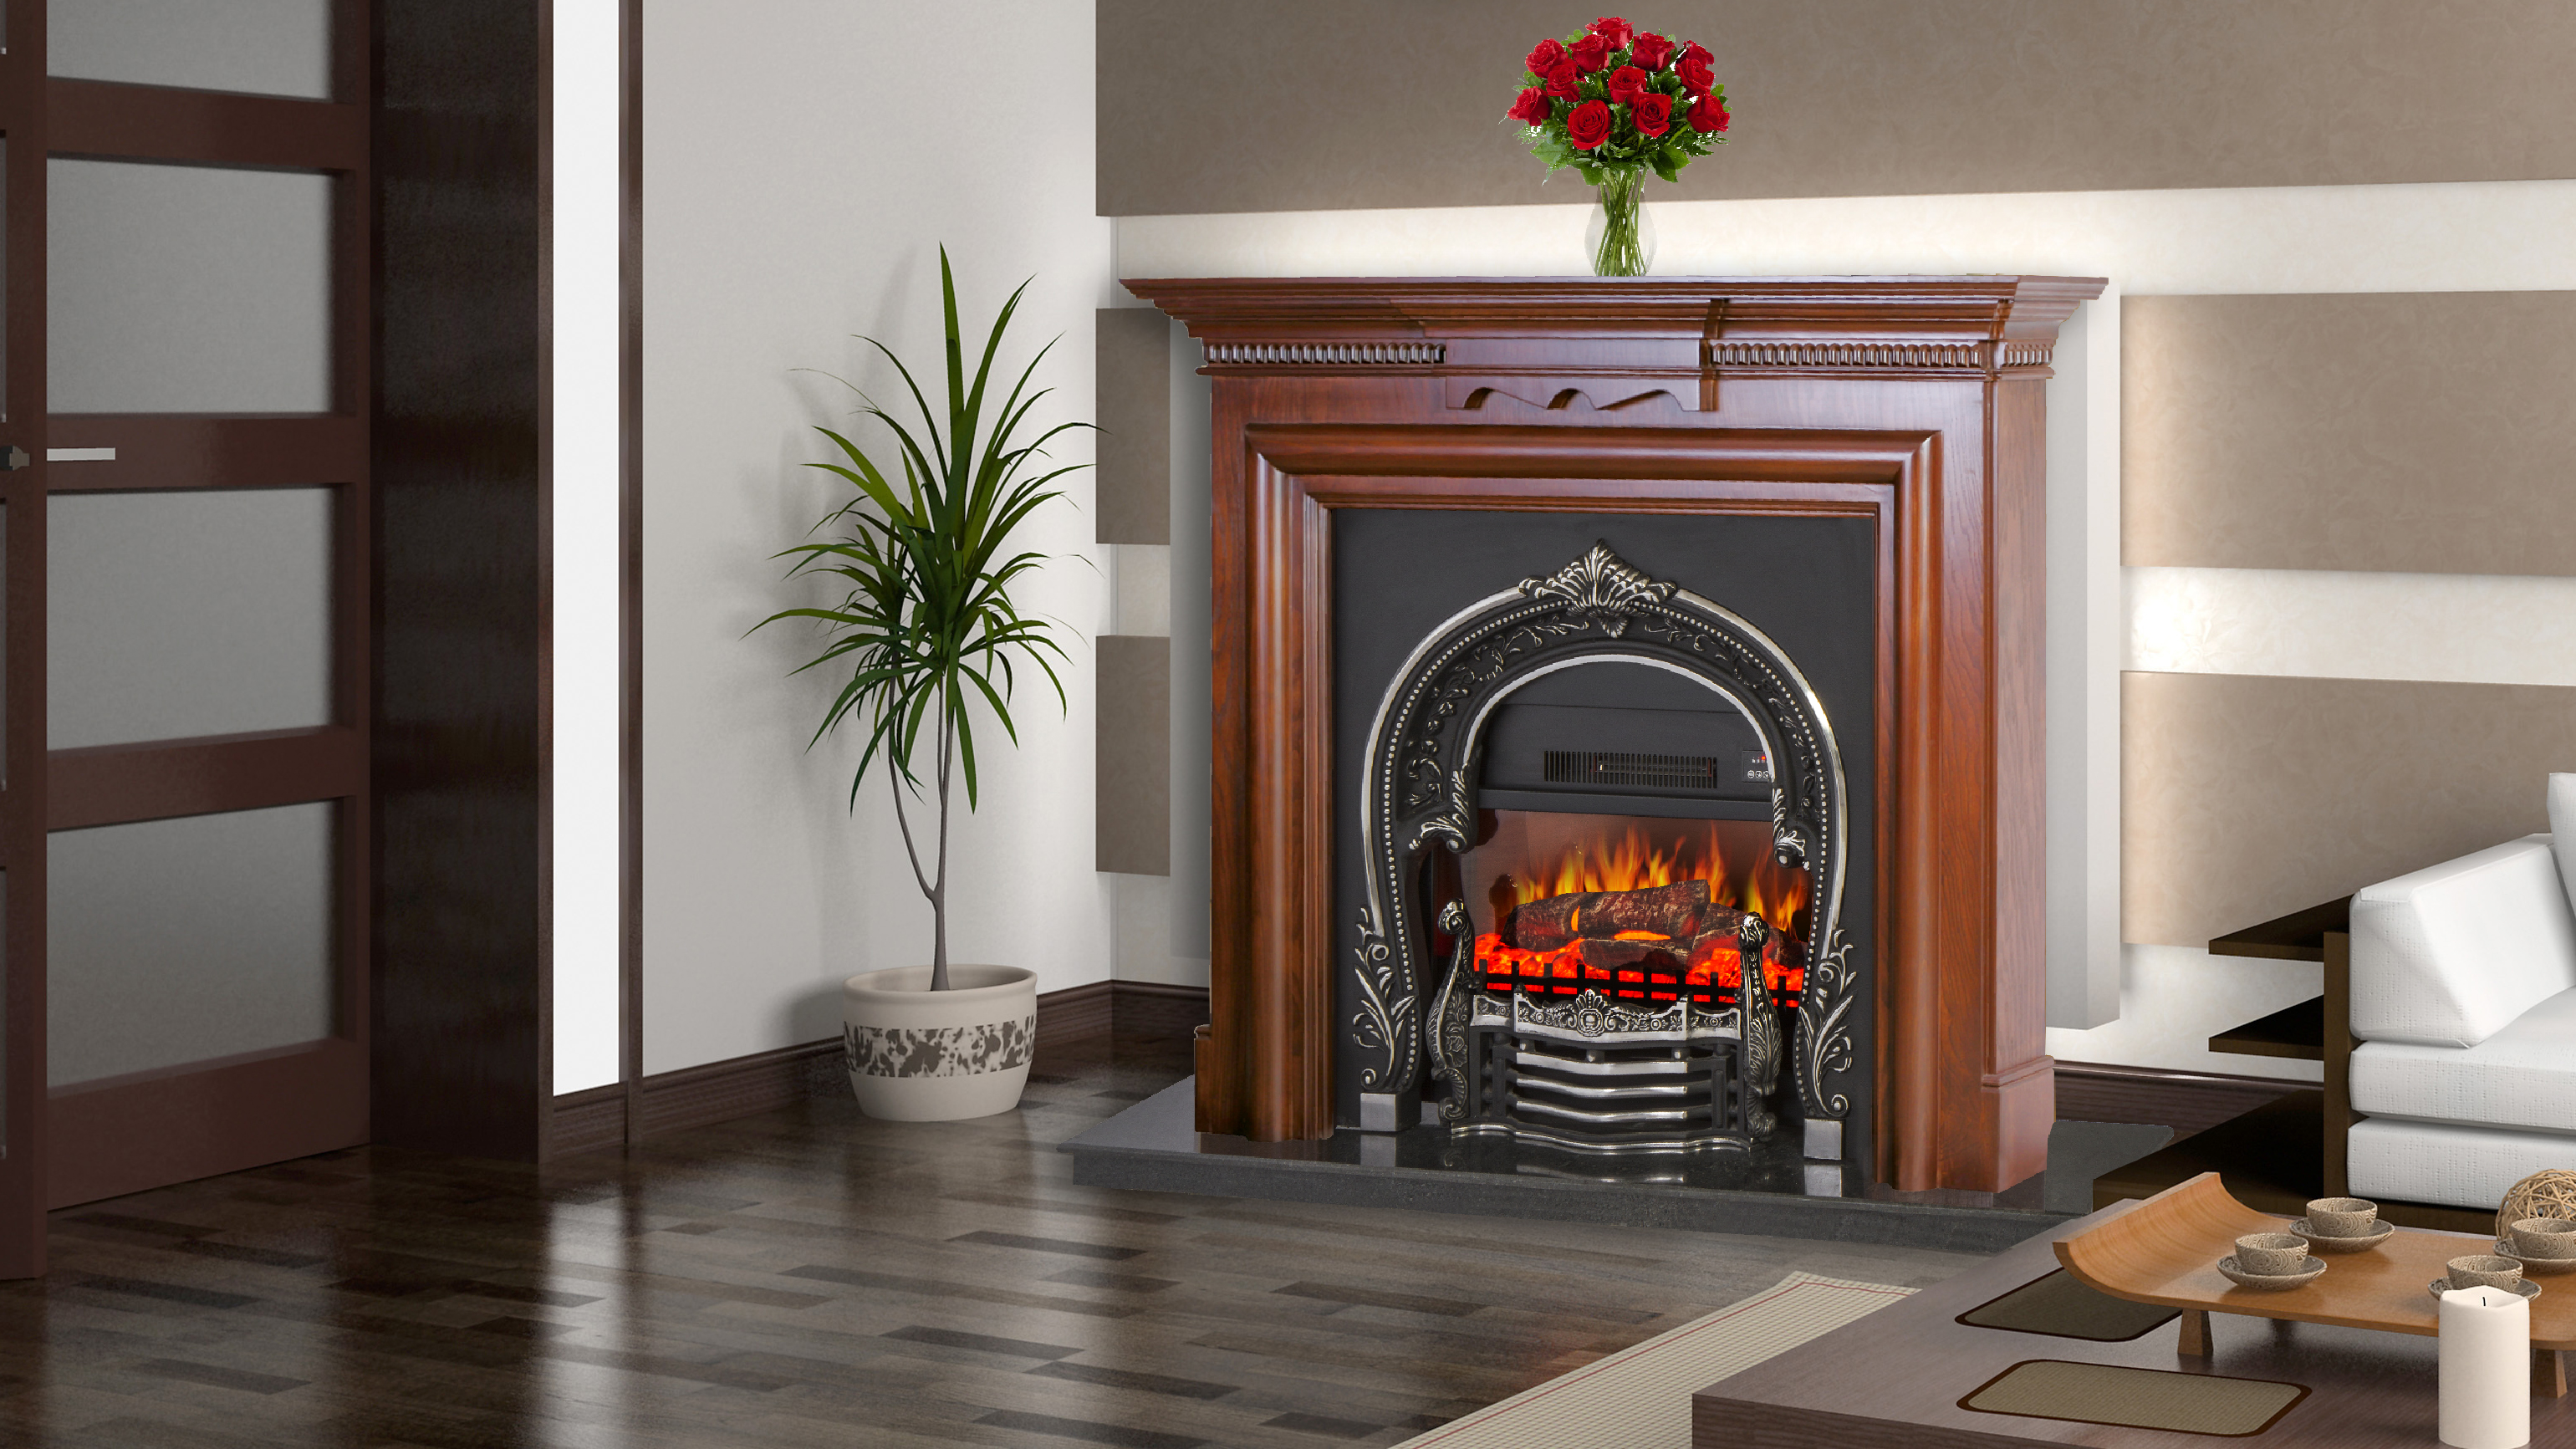 hb fireplace :: شومینه برقی اچ بیشومینه های برقی کلاسیک